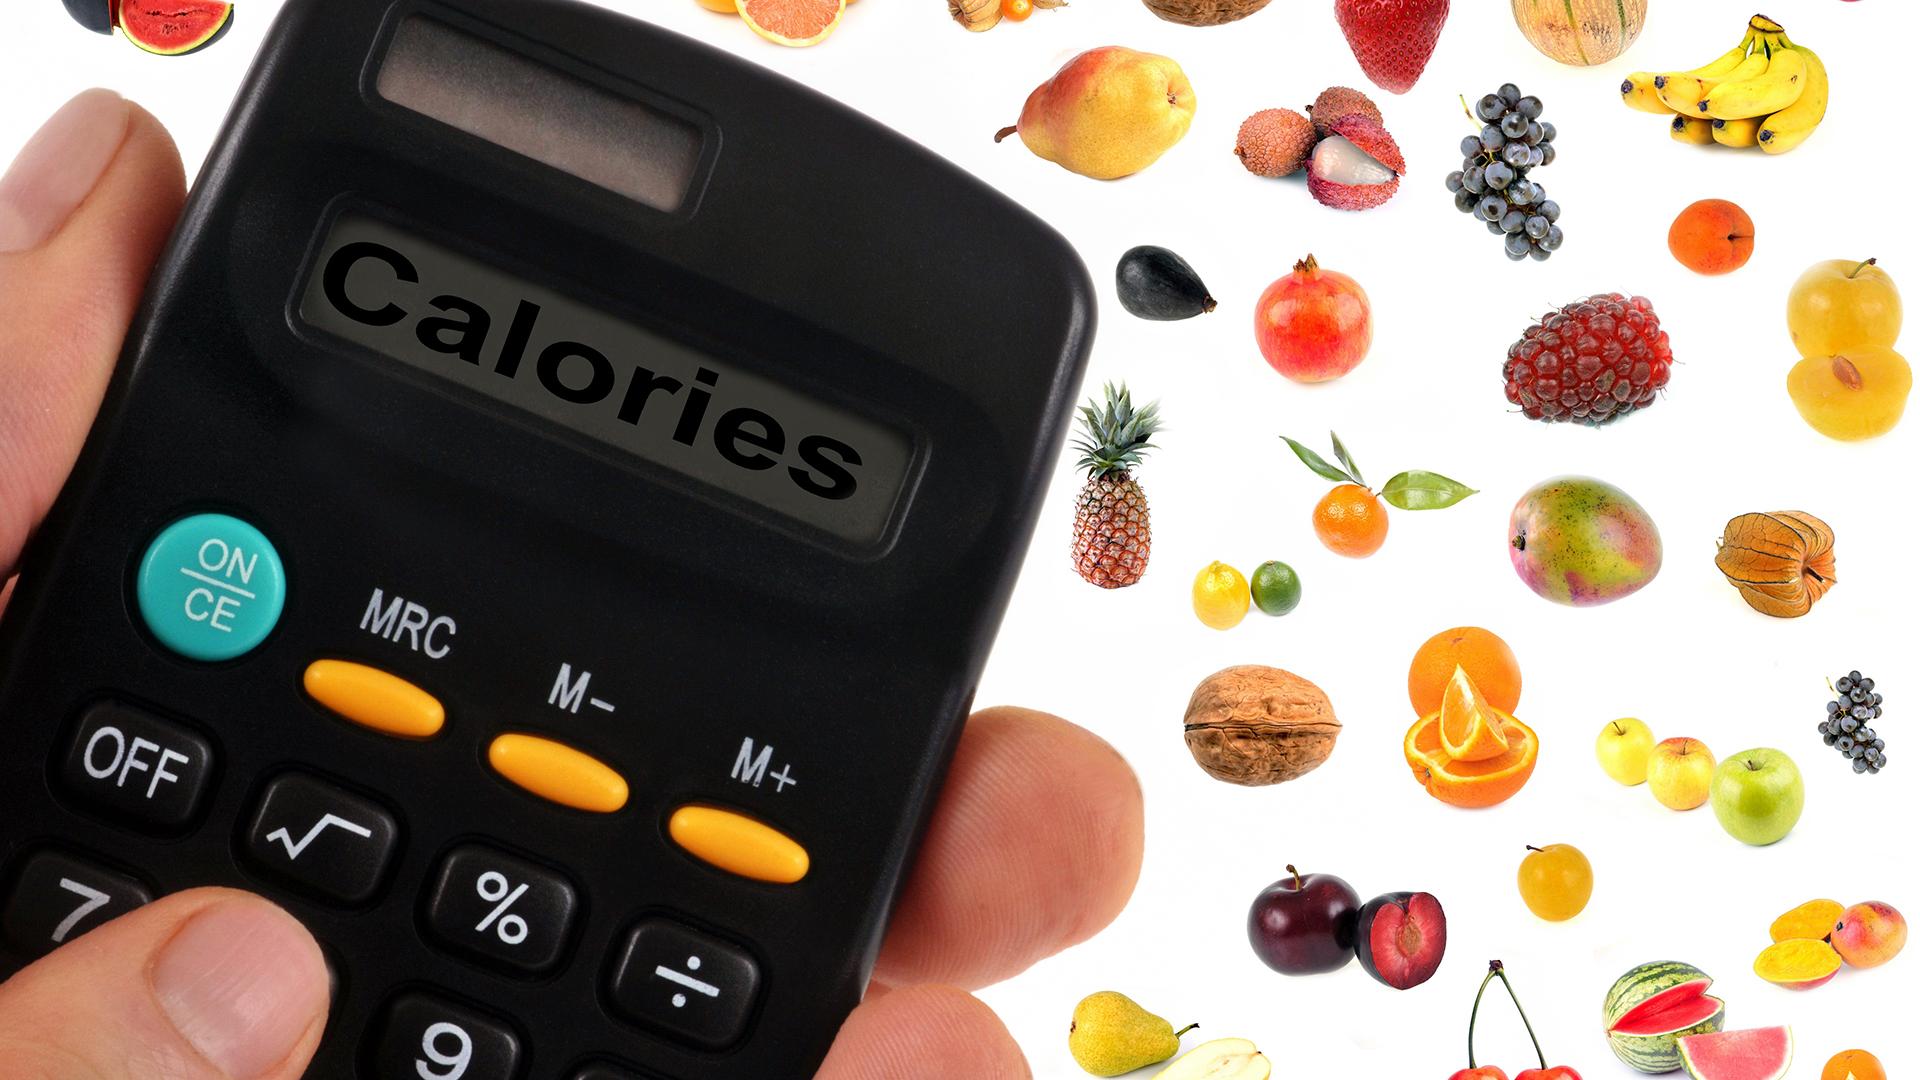 A calorie calculator